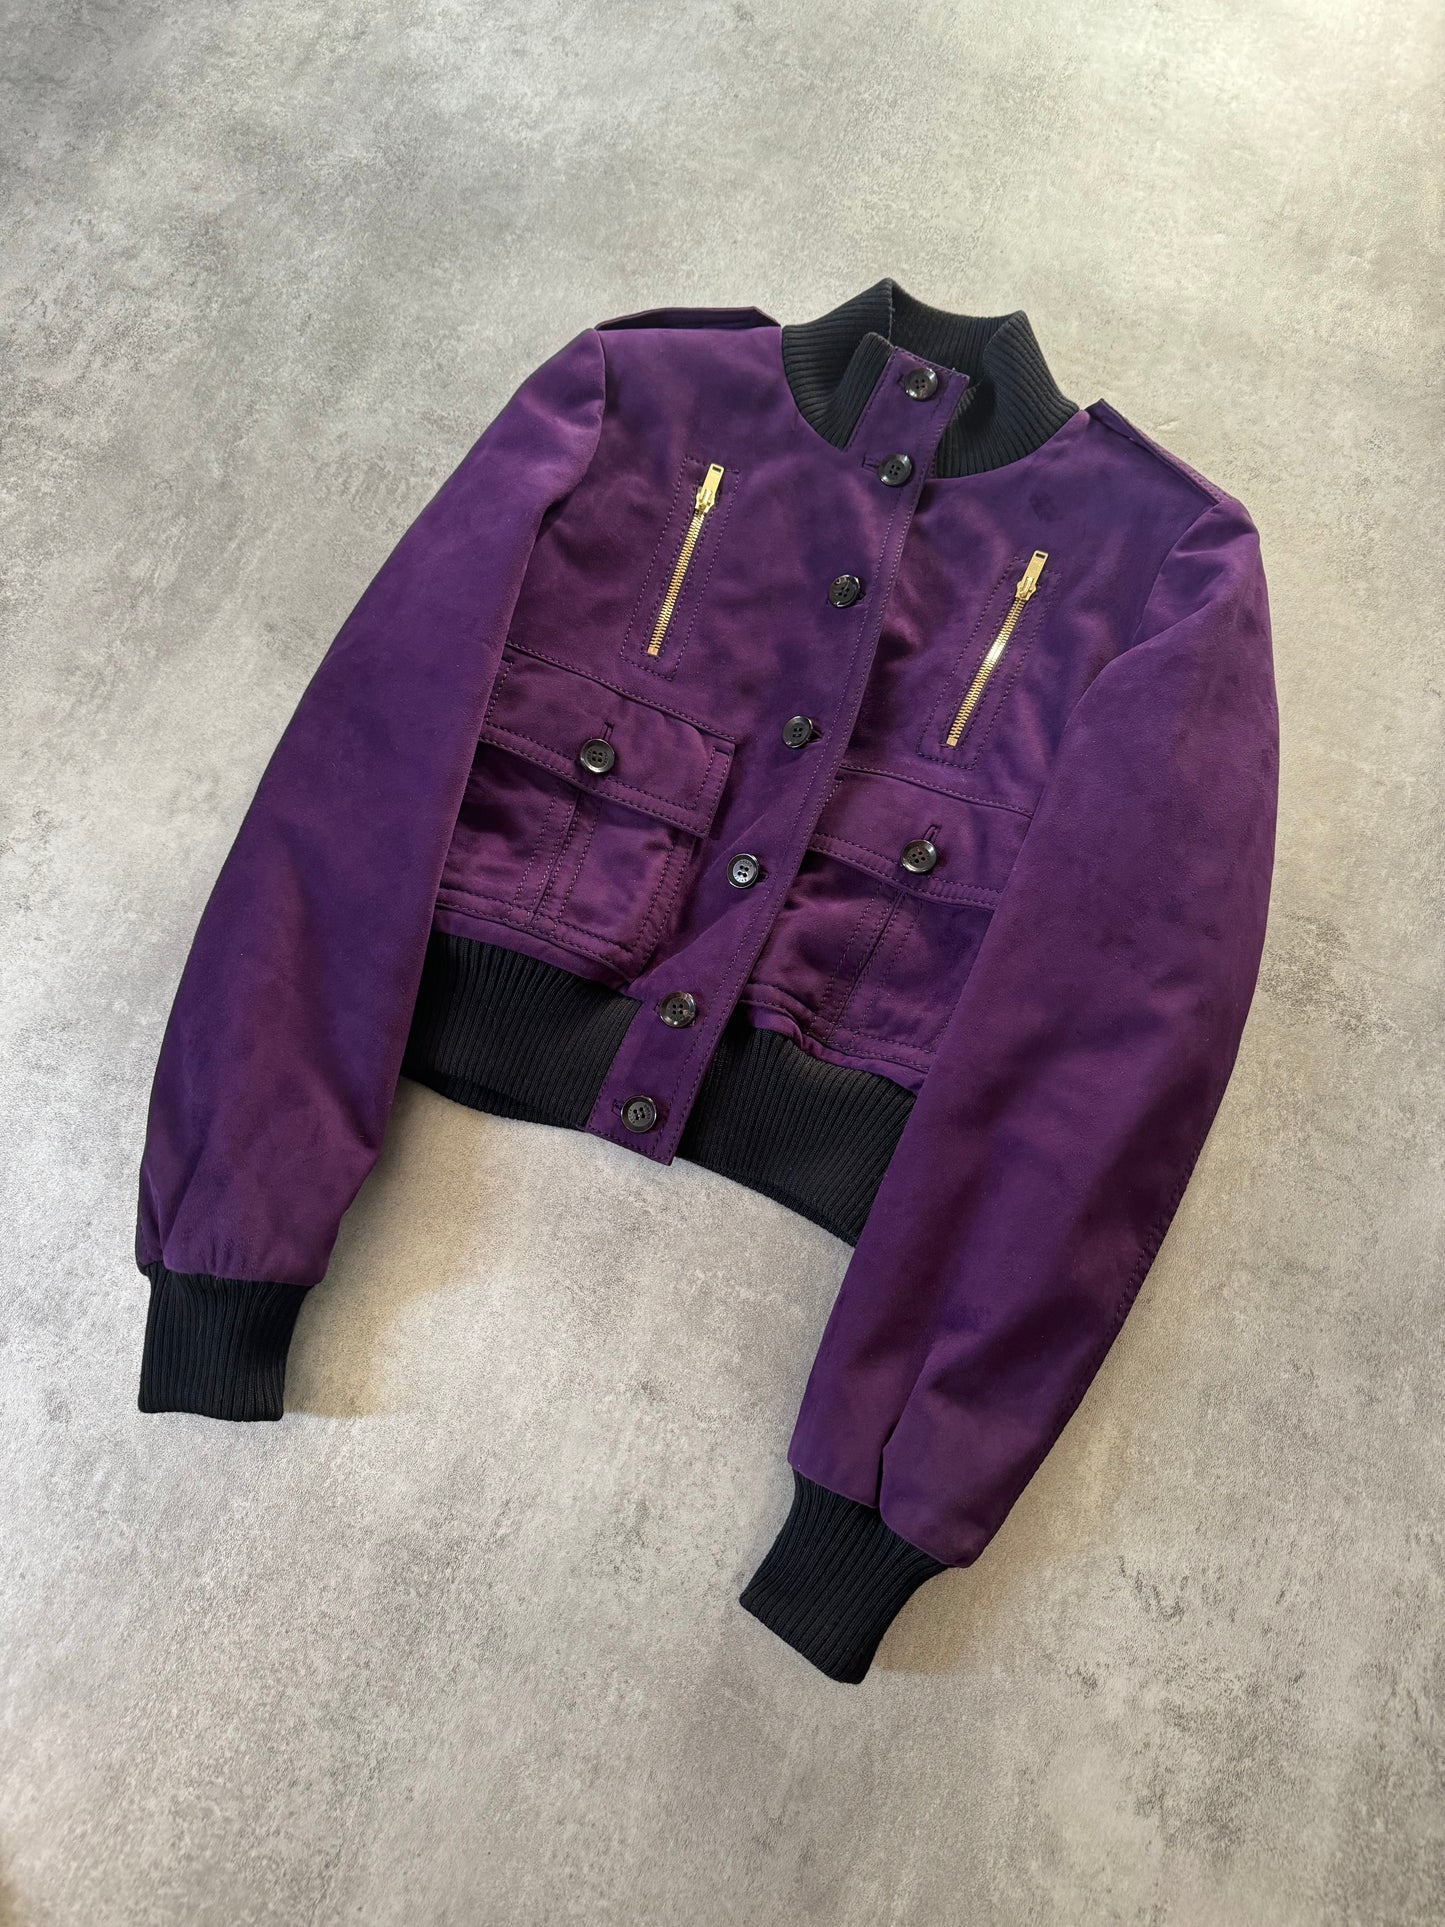 Gucci Purple Madonna Leather Jacket by Frida Giannini (S) - 4